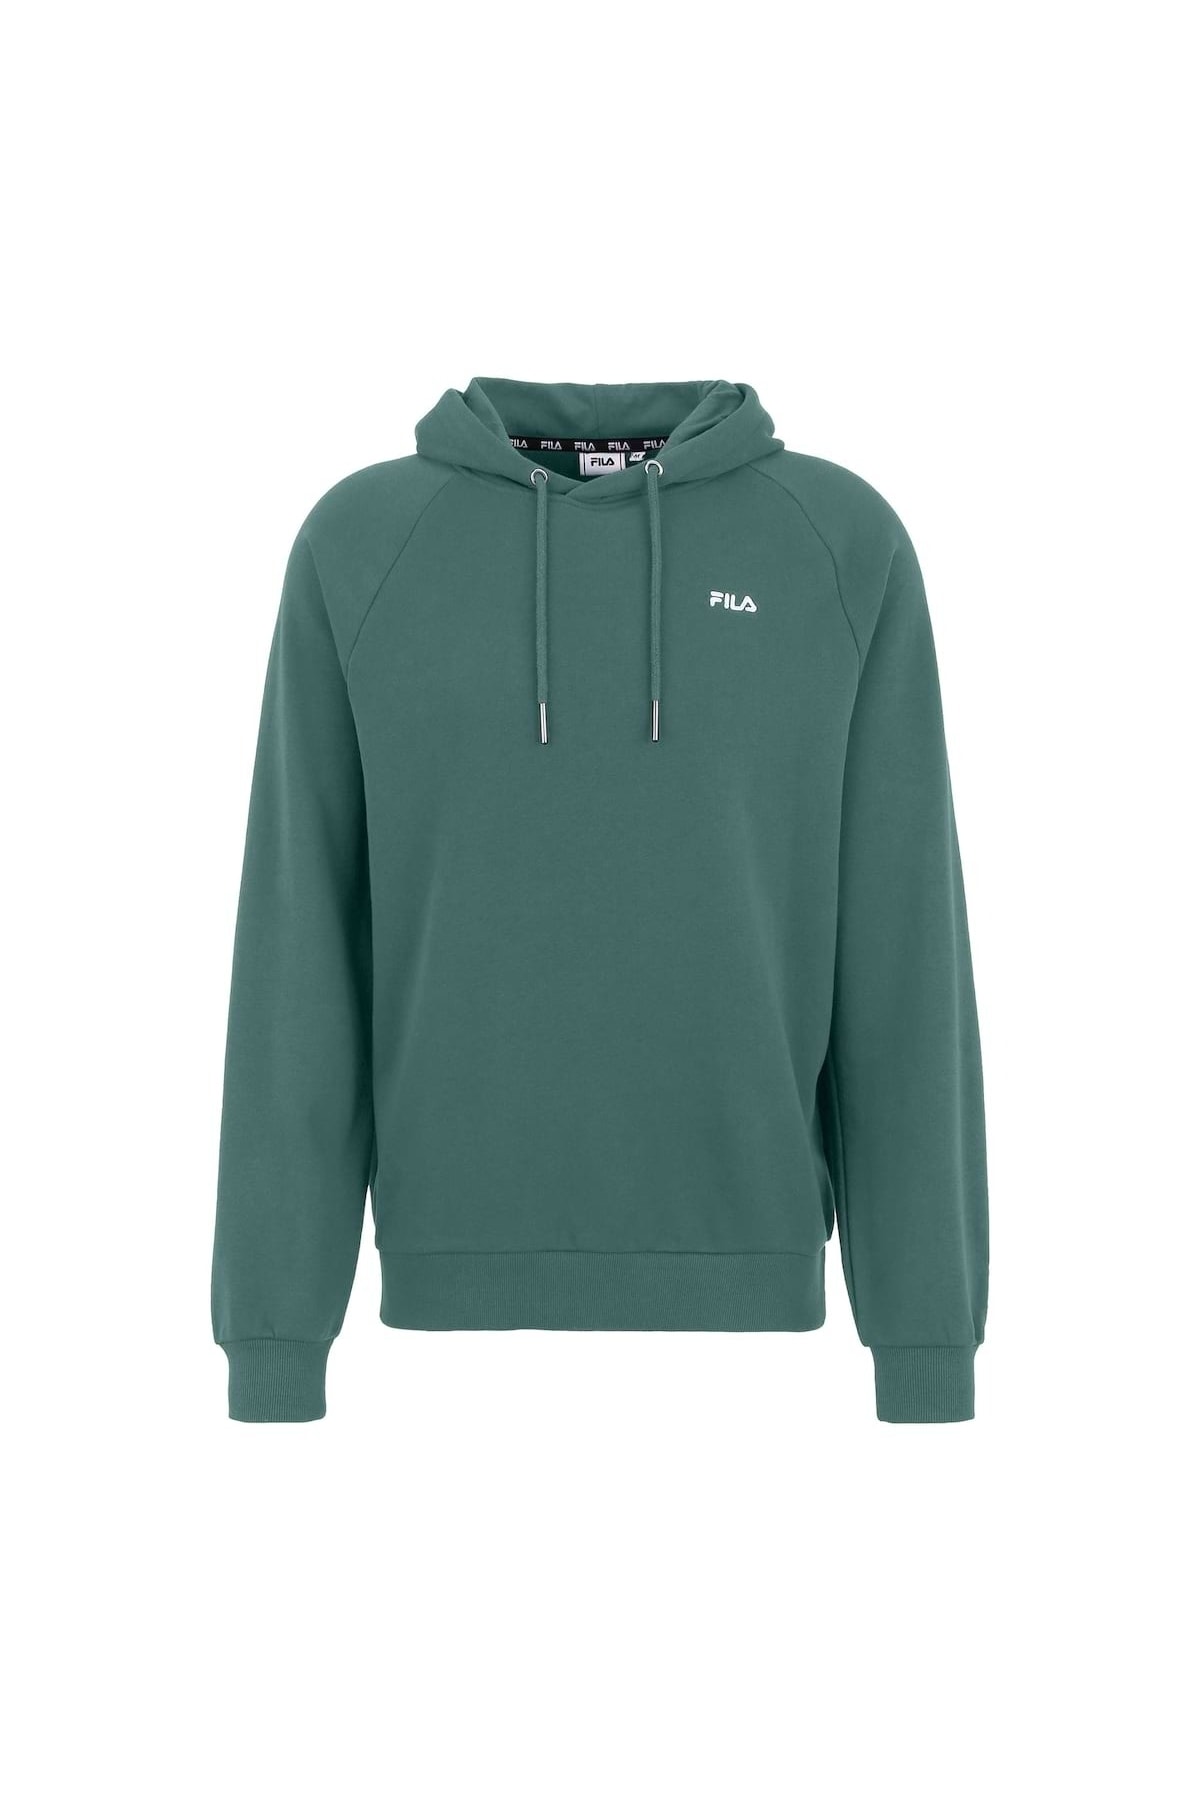 FILA Sweatshirt Grün Regular Fit Fast ausverkauft